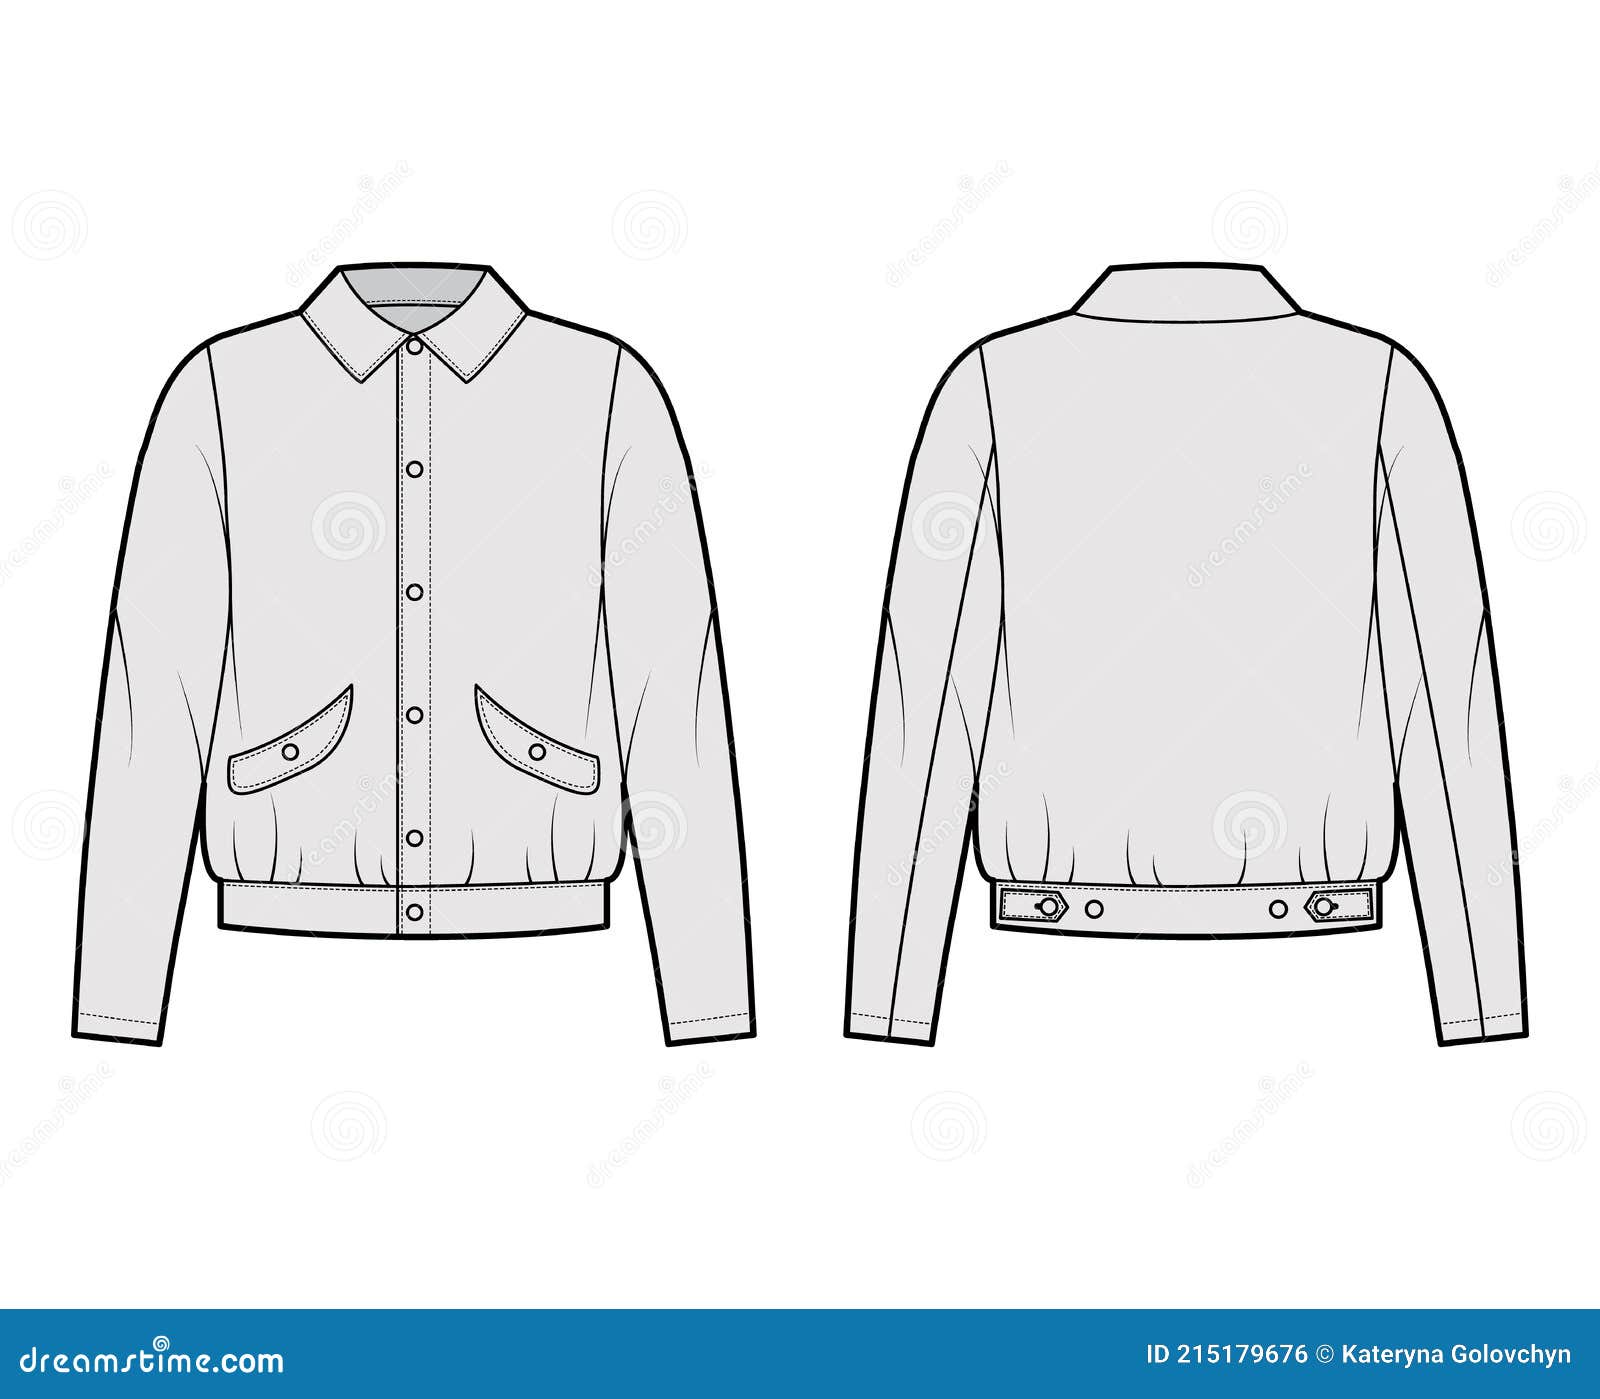 Blouson Jacket Technical Fashion Illustration with Classic Collar ...